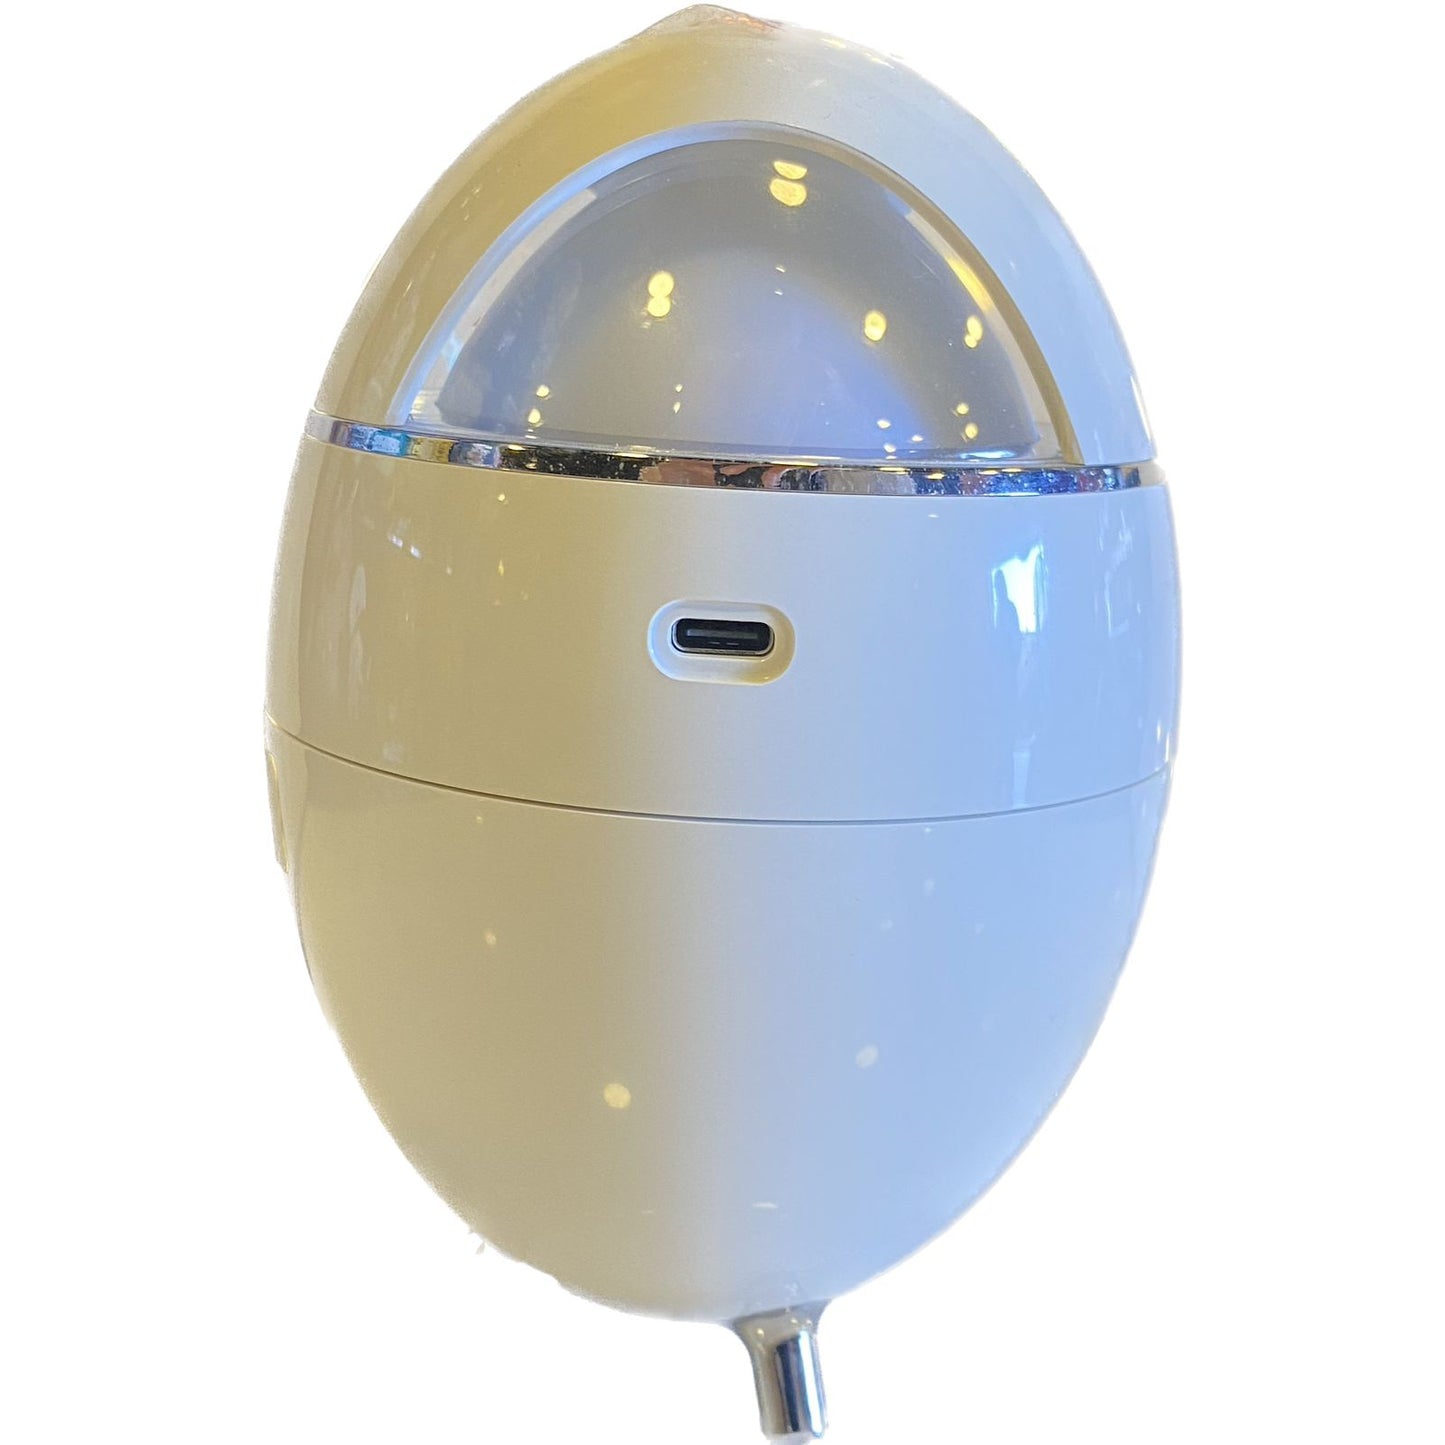 Oval Lighting Humidifier